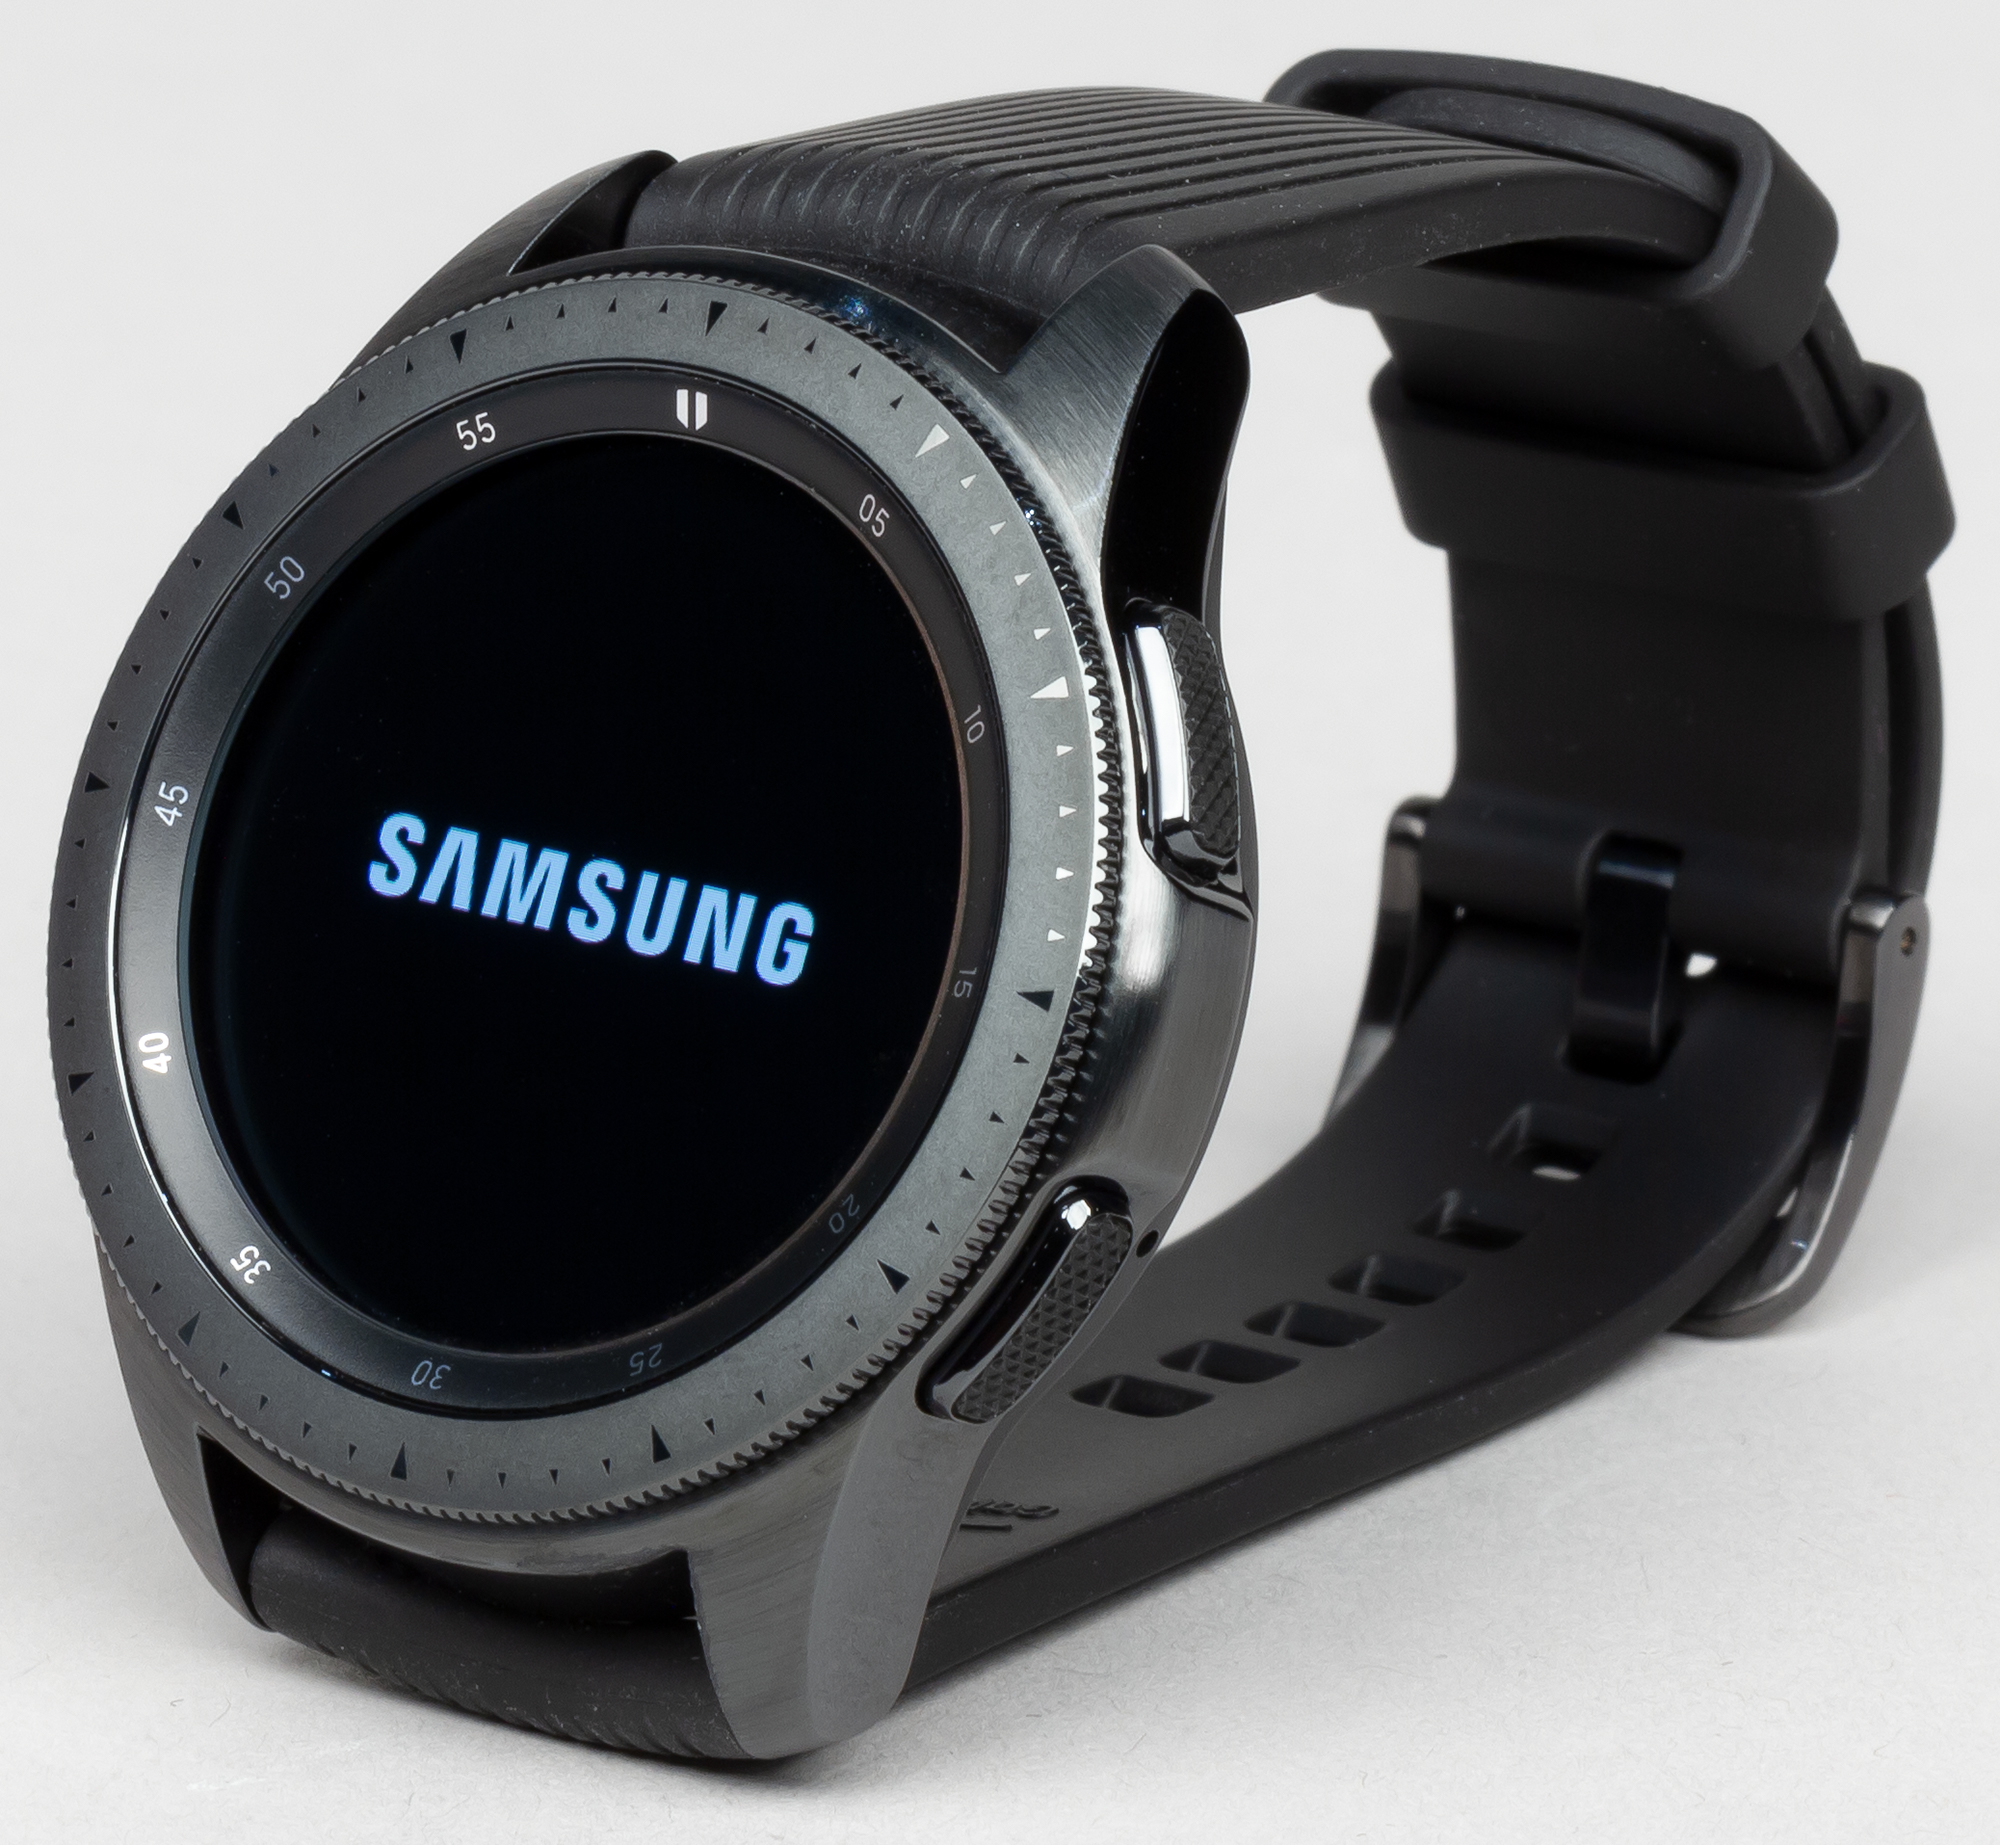 Samsung часы цены. Samsung Galaxy watch 42mm. Samsung Galaxy watch 42мм. Часы Samsung Galaxy watch 42mm. Samsung Galaxy watch 42mm Black.